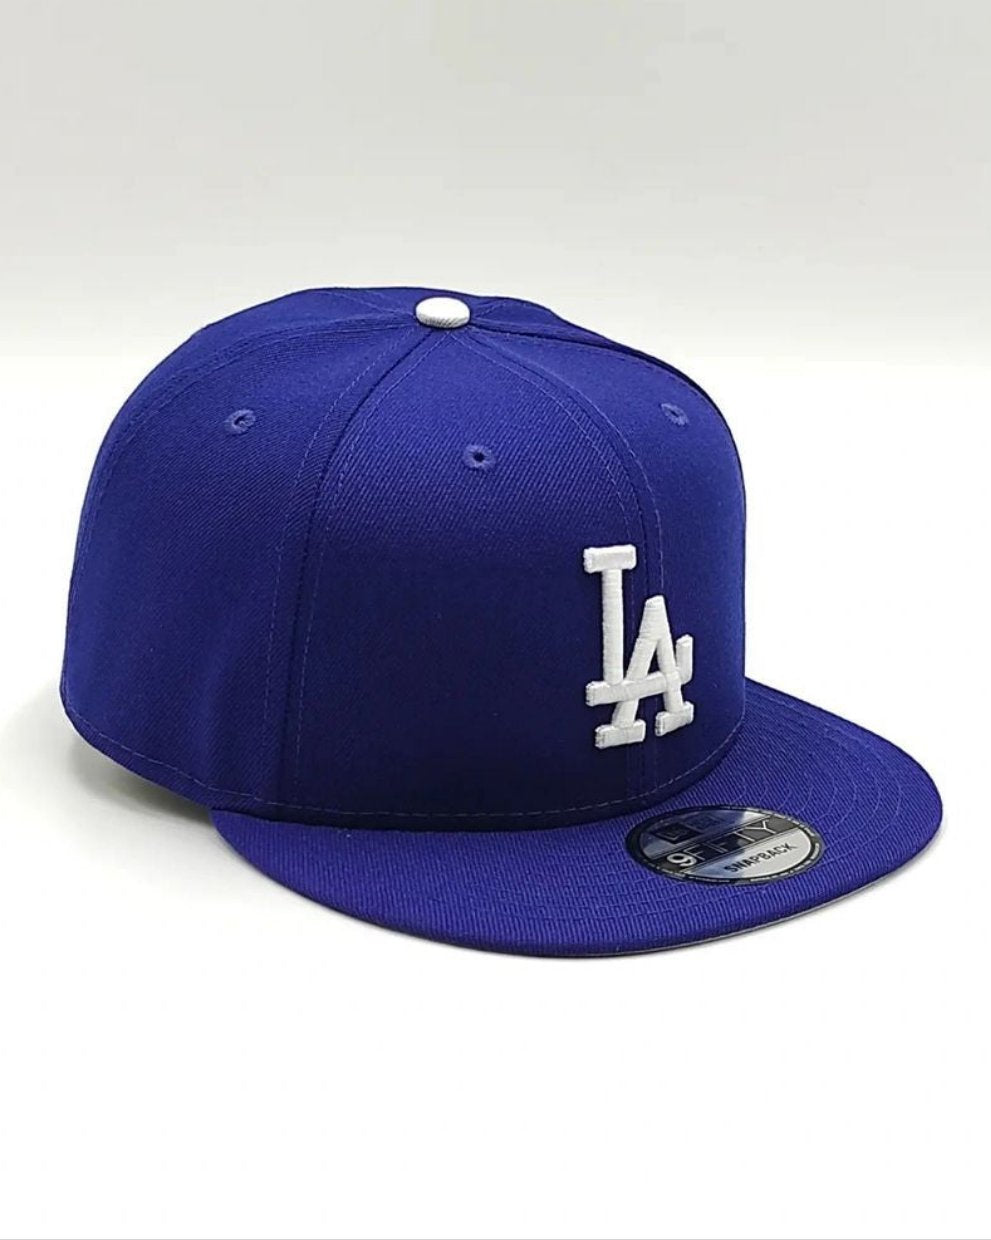 New Era Los Angeles Dodgers 9fifty snapback